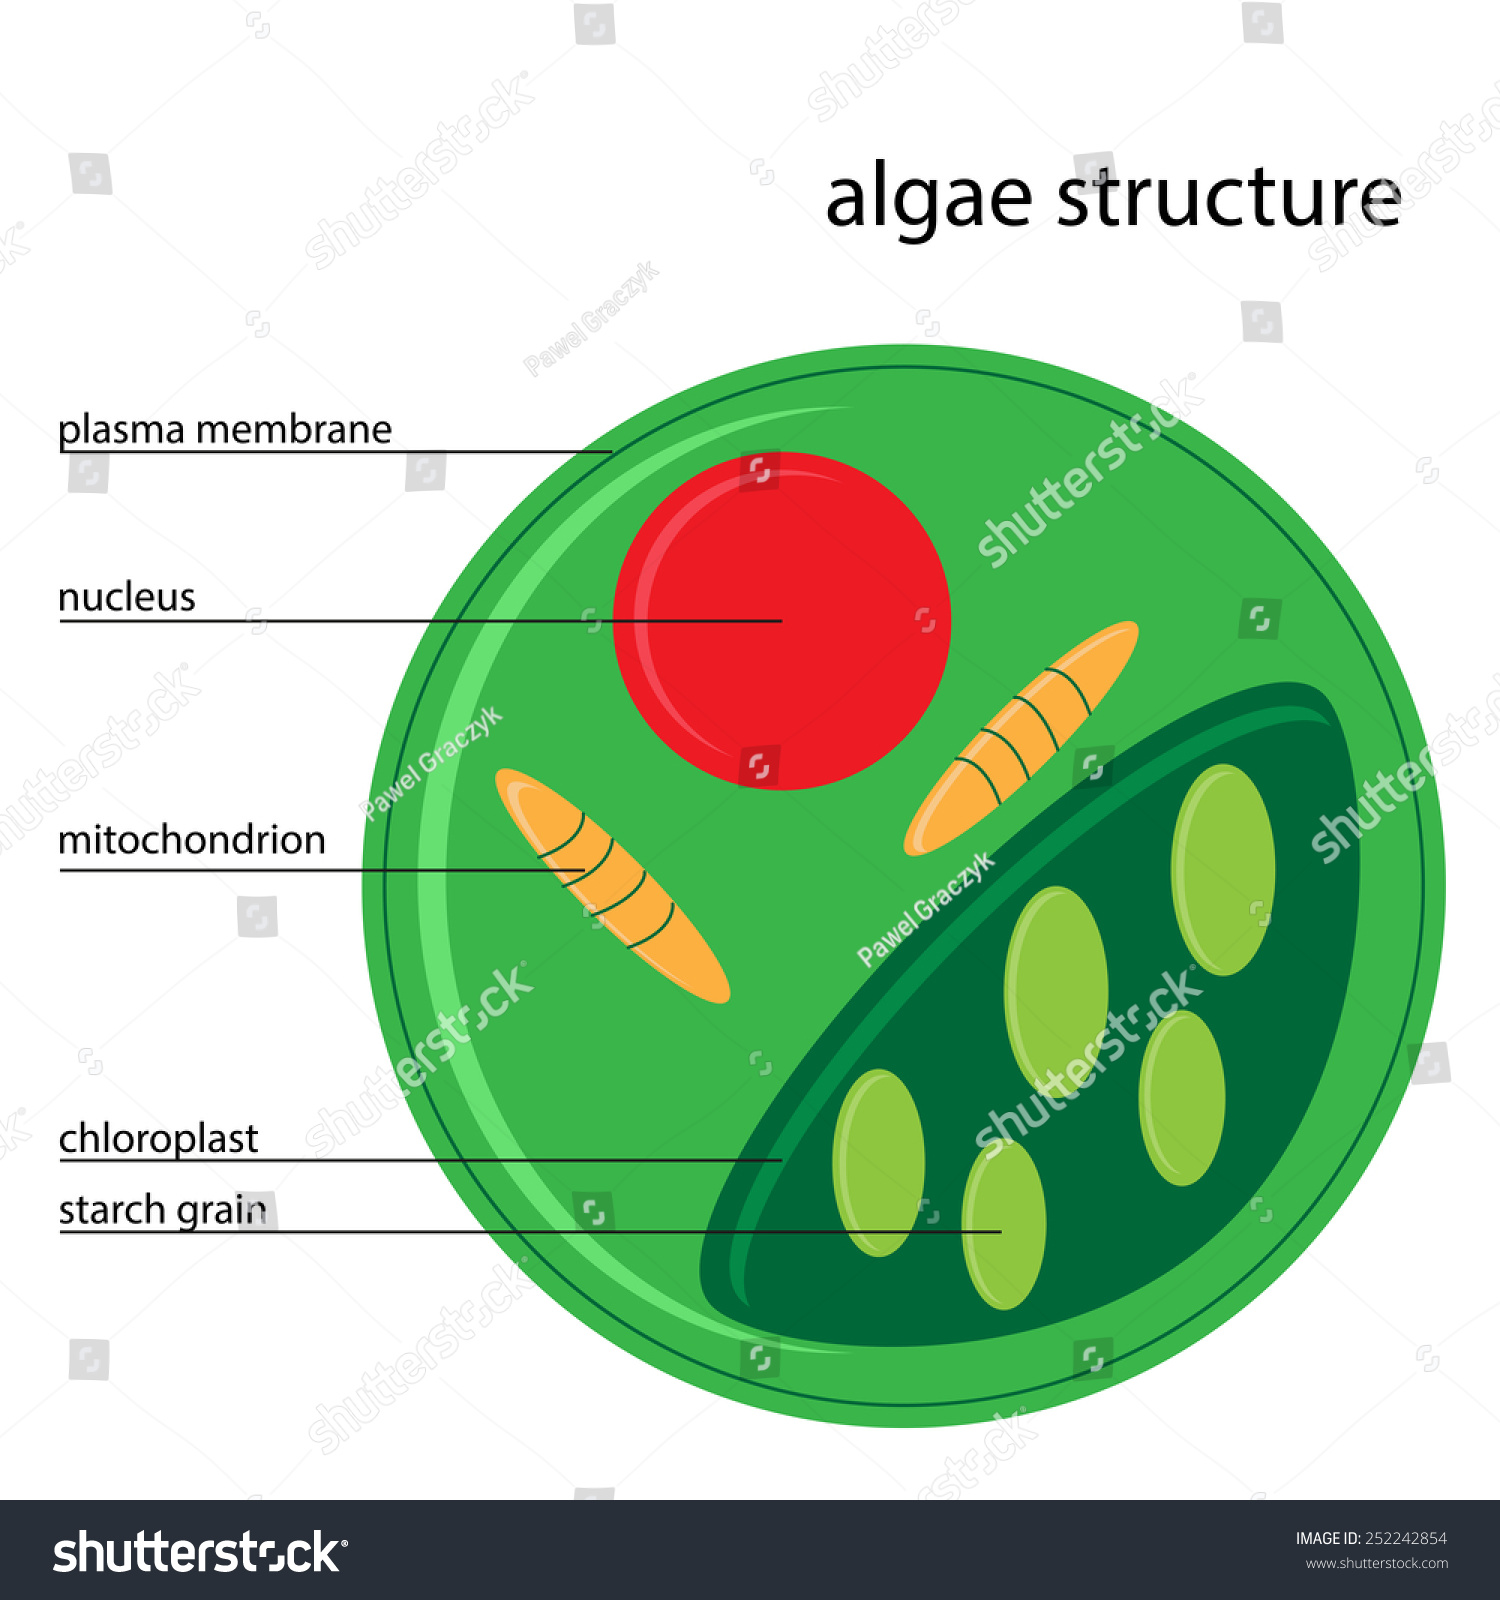 Vector Algae Structure Stock Vector 252242854 - Shutterstock